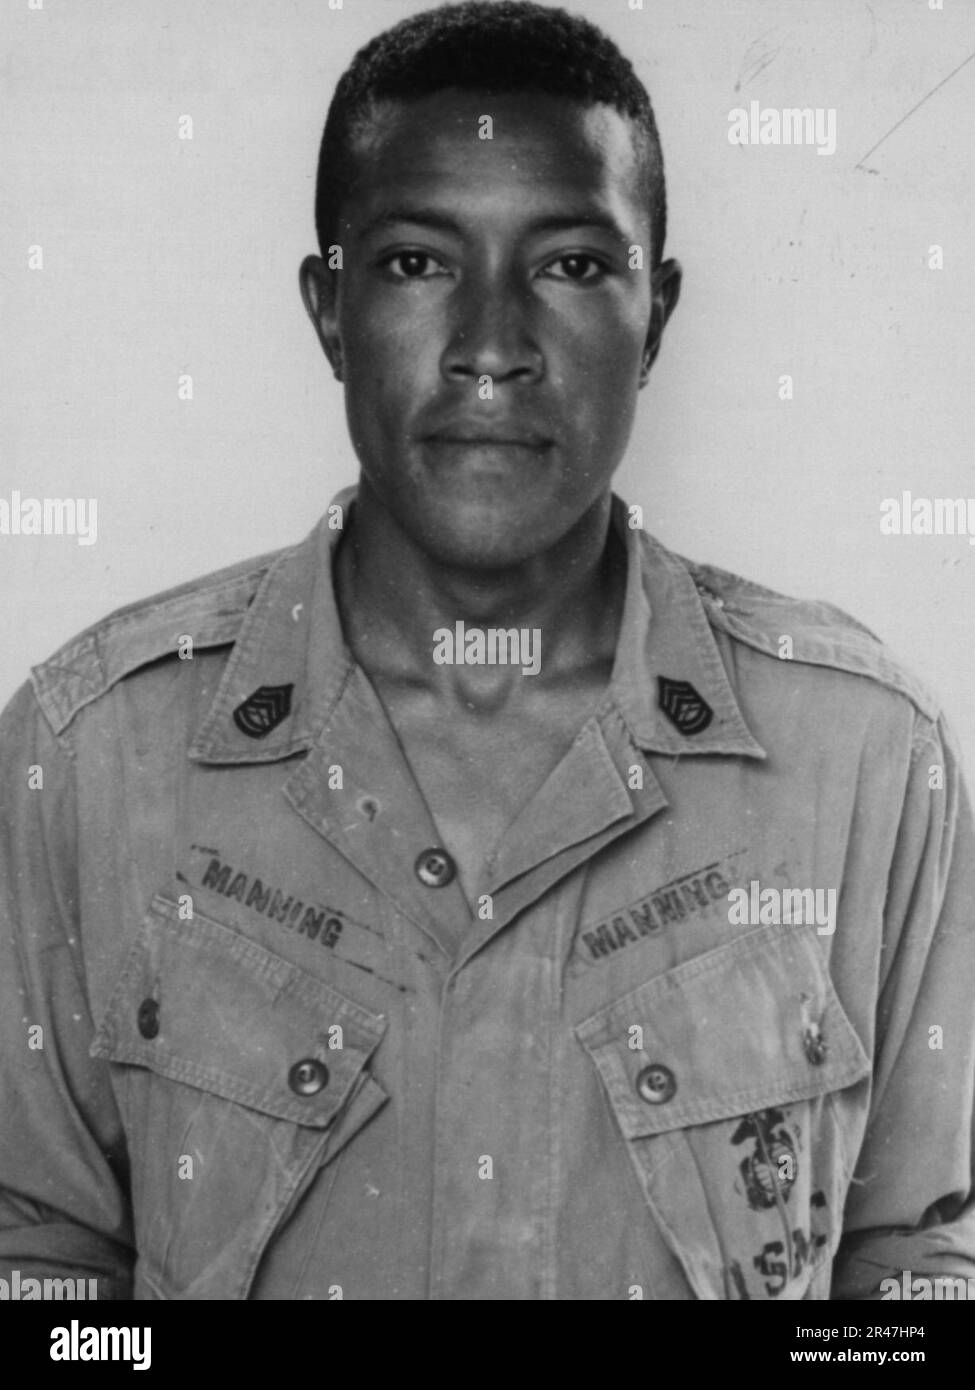 United States Marine Corps Gunnery Sergeant William T. Manning 1367024 Combat Photographers (Larry Burrows, Time-Life) - DPLA - d3f4d3906b70cc38d404442a9842f3c3 (cropped) Stock Photo